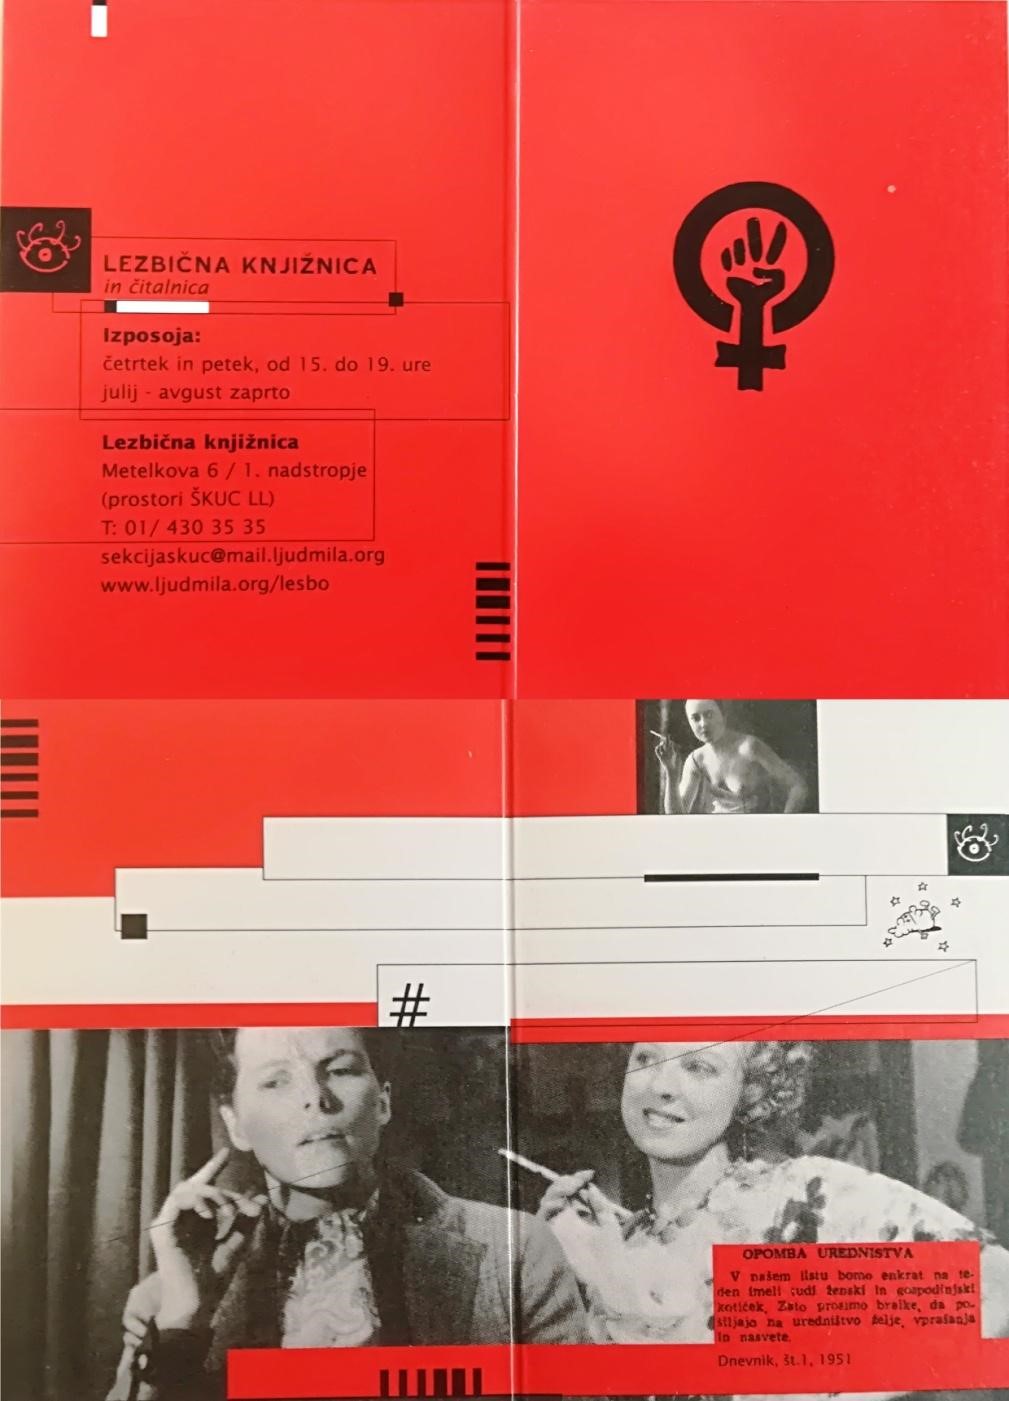 The Lesbian Library and Archive membership card, both sides (Ljubljana: ŠKUC LL, no date).